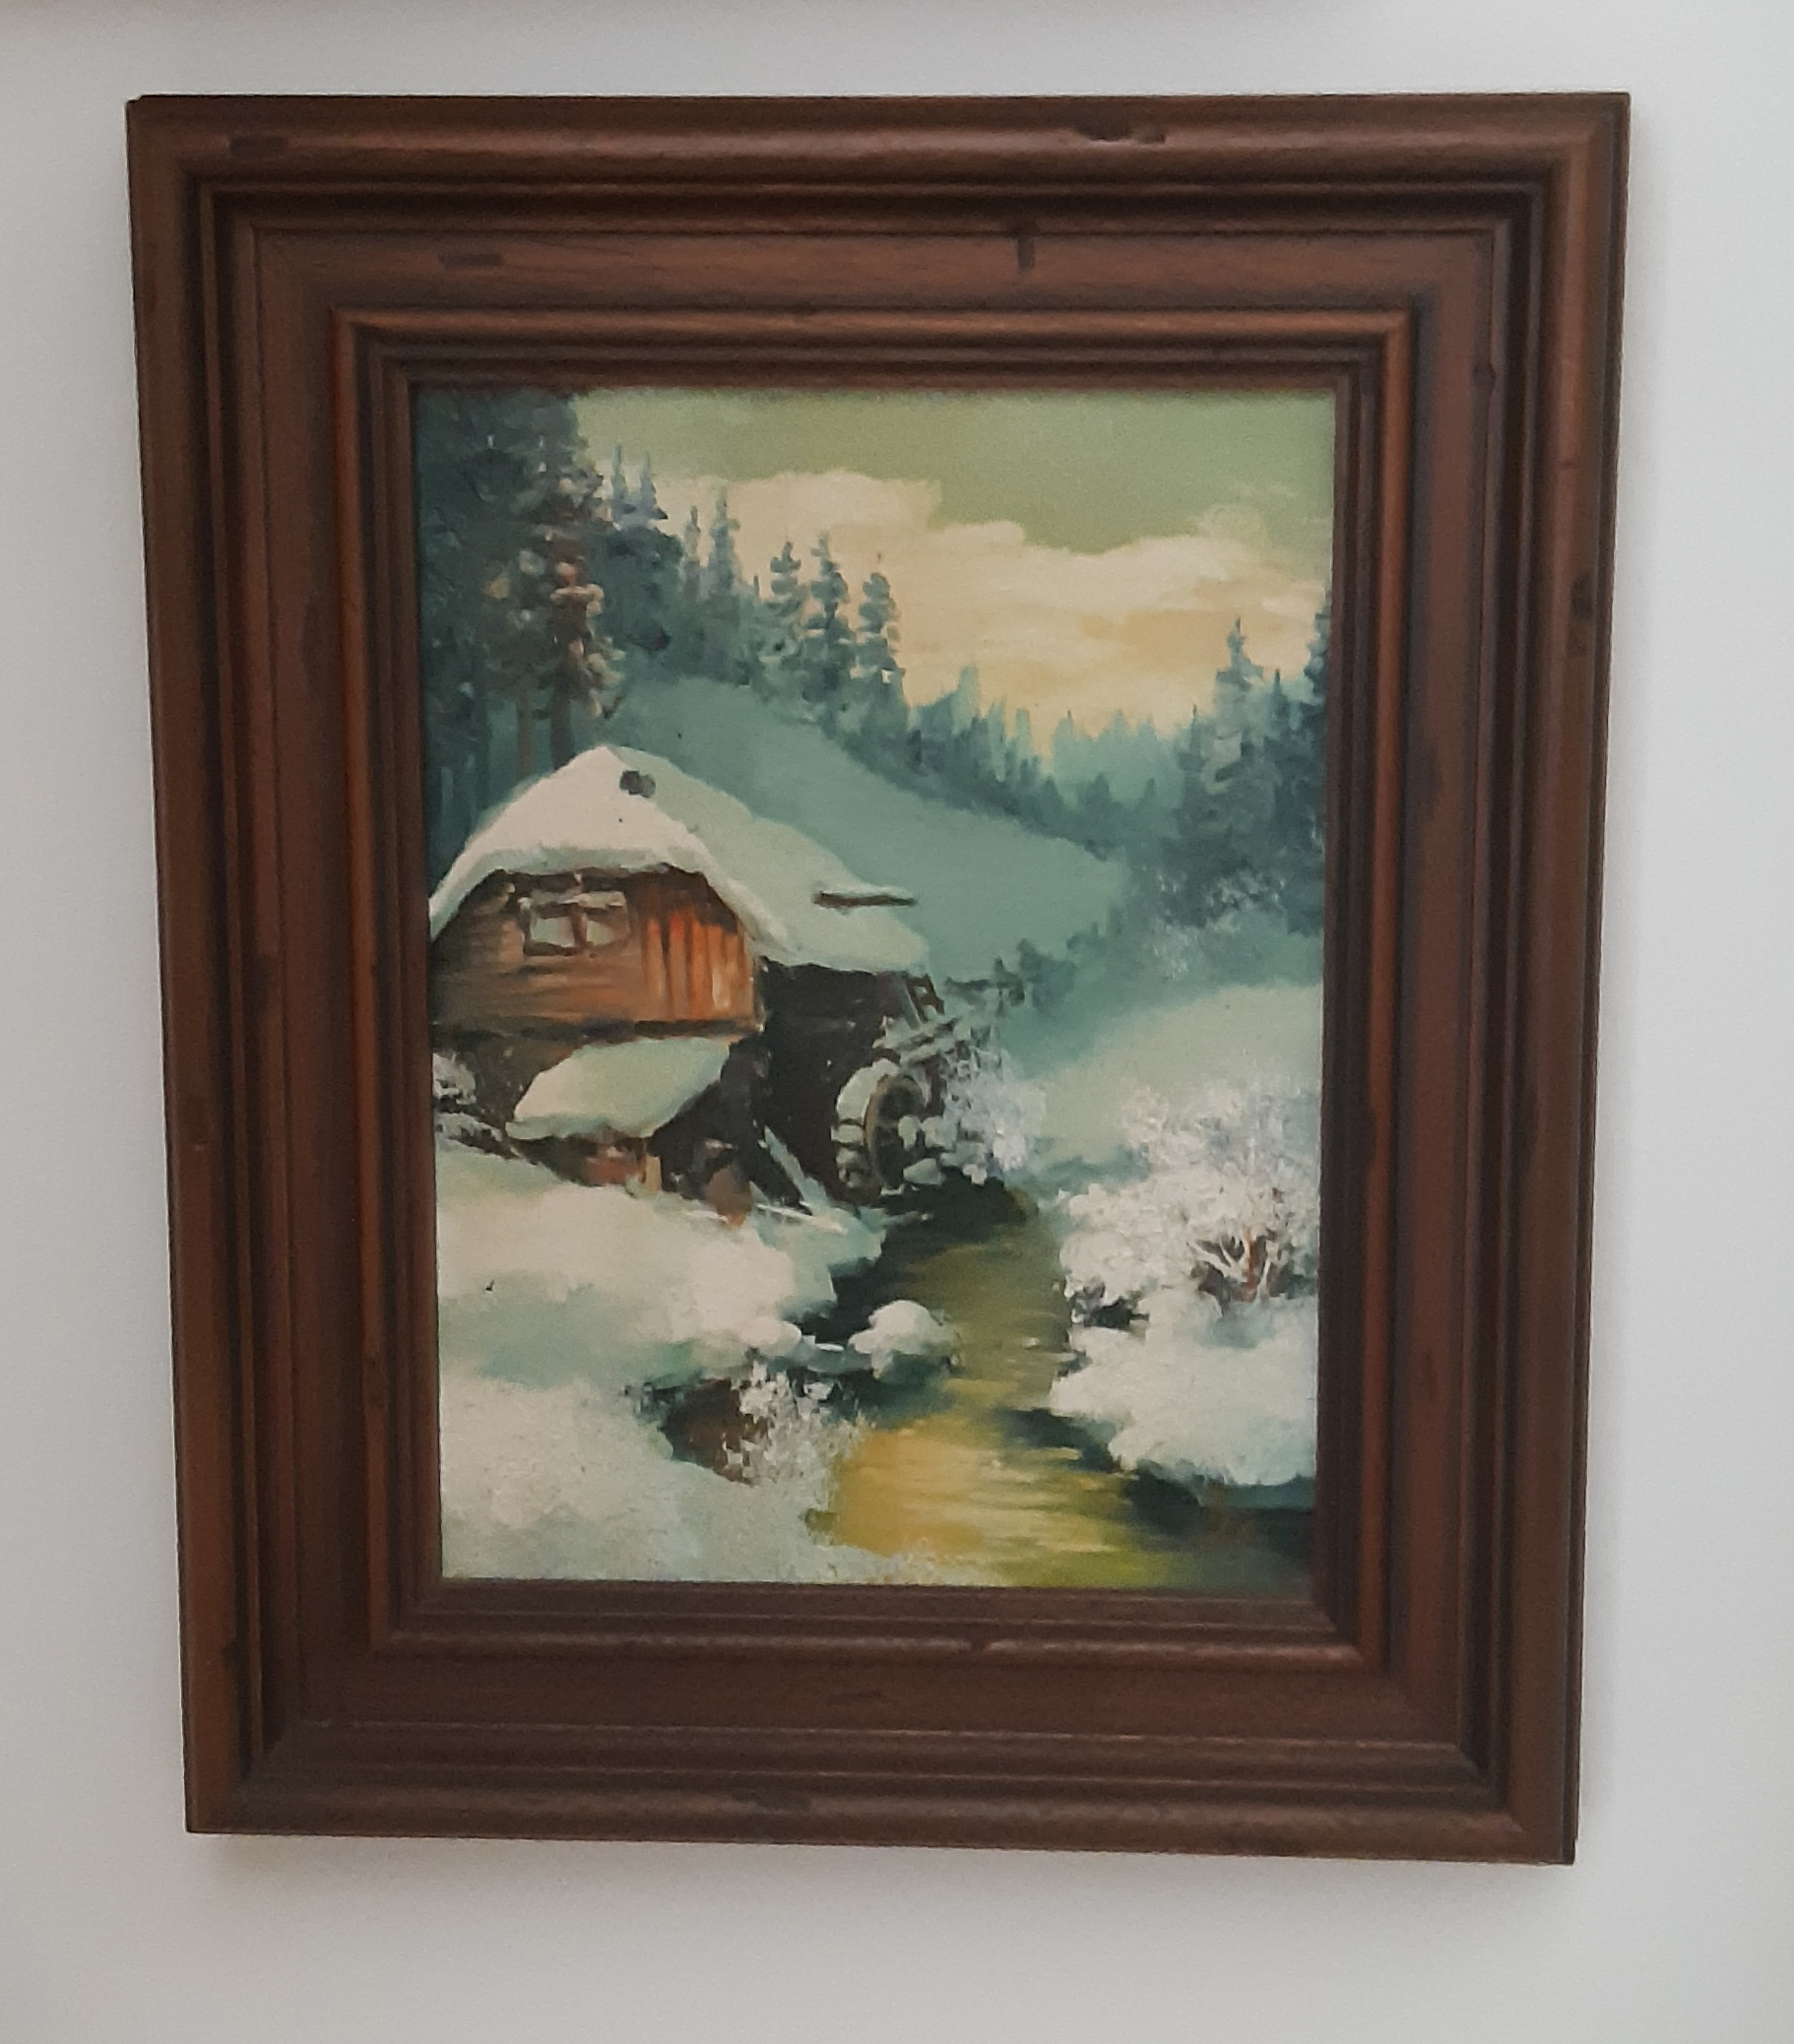 Painting 4 Seasons